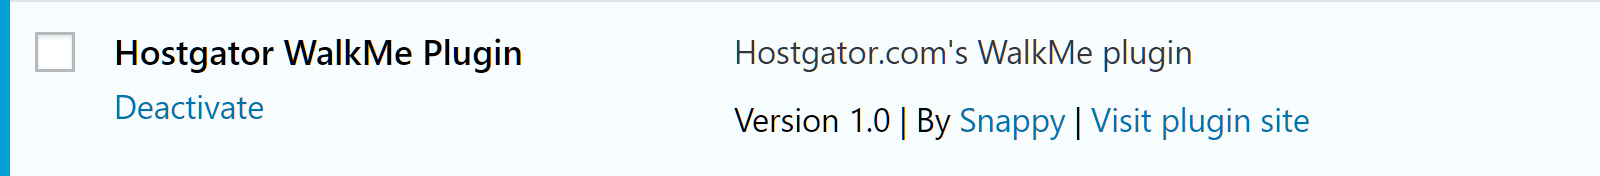 HostGator WalkMe Plugin Details